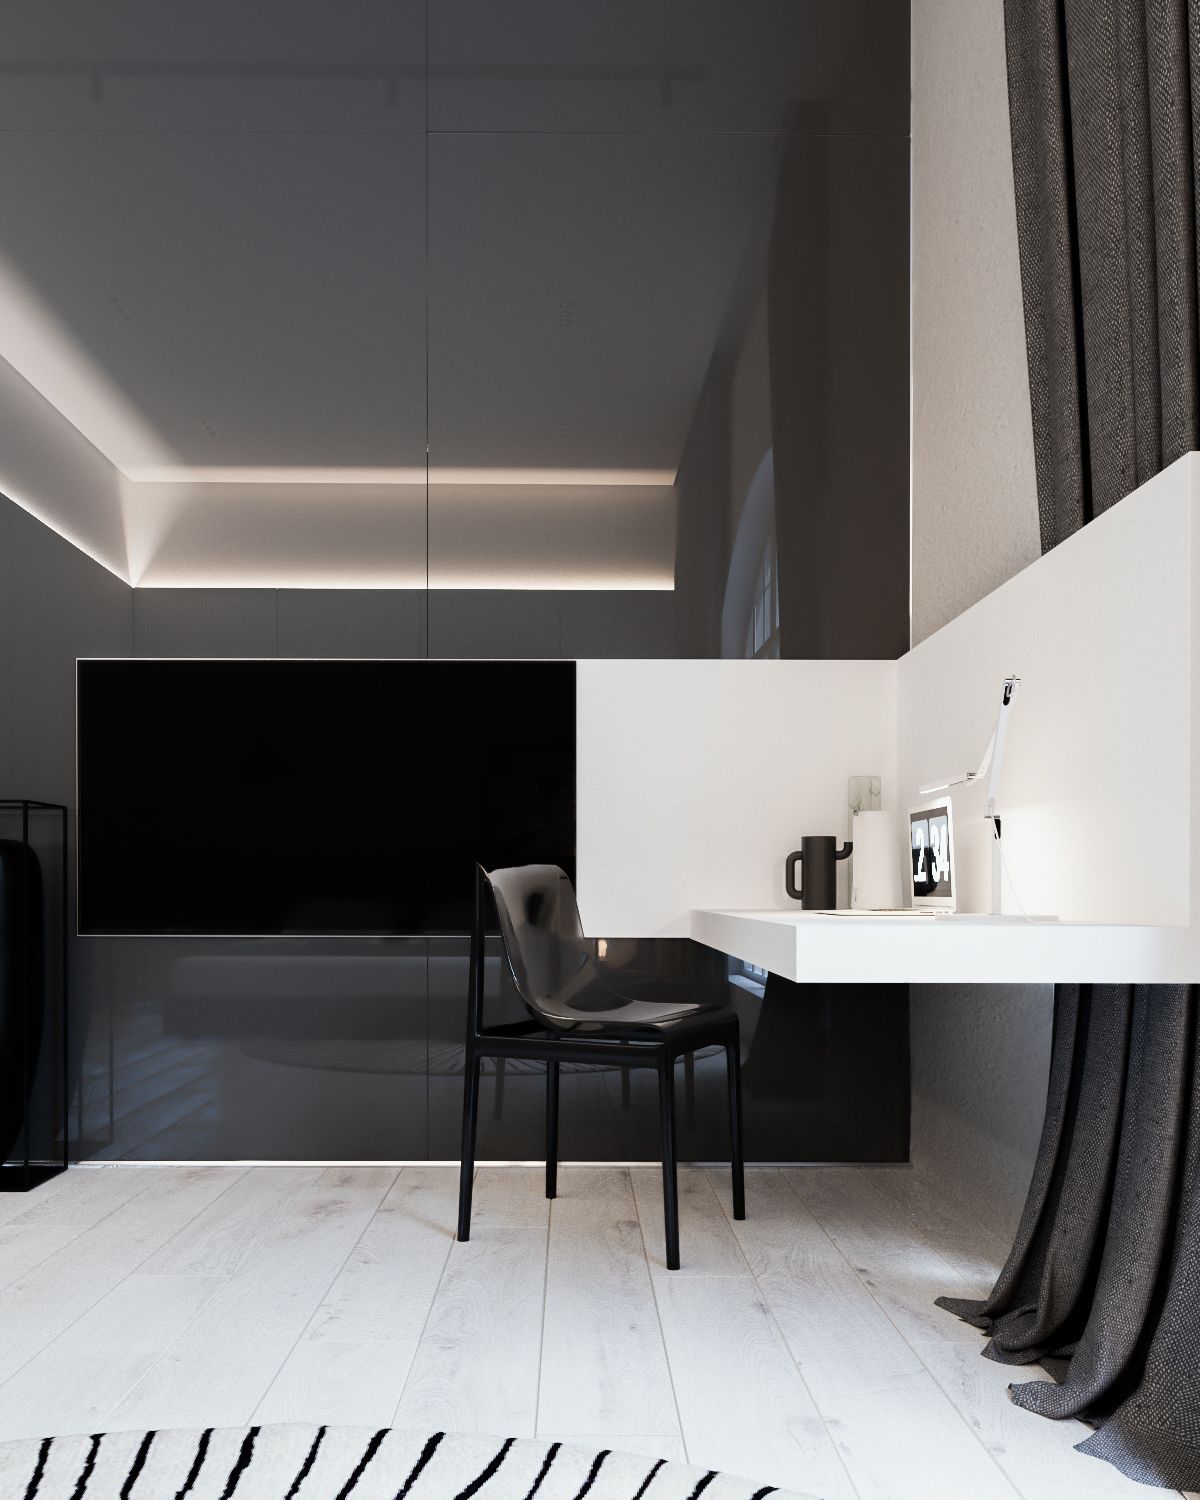 Modern furnishing style for stylish apartment design "width =" 1200 "height =" 1500 "srcset =" https://mileray.com/wp-content/uploads/2020/05/1588510802_938_2-Modern-Interior-Style-For-Stylish-Bedroom-Design.jpg 1200w, https://mileray.com/wp-content/uploads/2016/06/creative-bedroom-vanity-built-in-240x300.jpg 240w, https://mileray.com/wp-content/uploads/2016 / 06 /creative-bedroom-vanity-built-in-768x960.jpg 768w, https://mileray.com/wp-content/uploads/2016/06/creative-bedroom-vanity-built-in-819x1024.jpg 819w, https : //mileray.com/wp-content/uploads/2016/06/creative-bedroom-vanity-built-in-696x870.jpg 696w, https://mileray.com/wp-content/uploads/2016/ 06 / Creative-bedroom-vanity-built-in-1068x1335.jpg 1068w, https://mileray.com/wp-content/uploads/2016/06/creative-bedroom-vanity-built-in-336x420.jpg 336w "sizes =" ( maximum width: 1200px) 100vw, 1200px